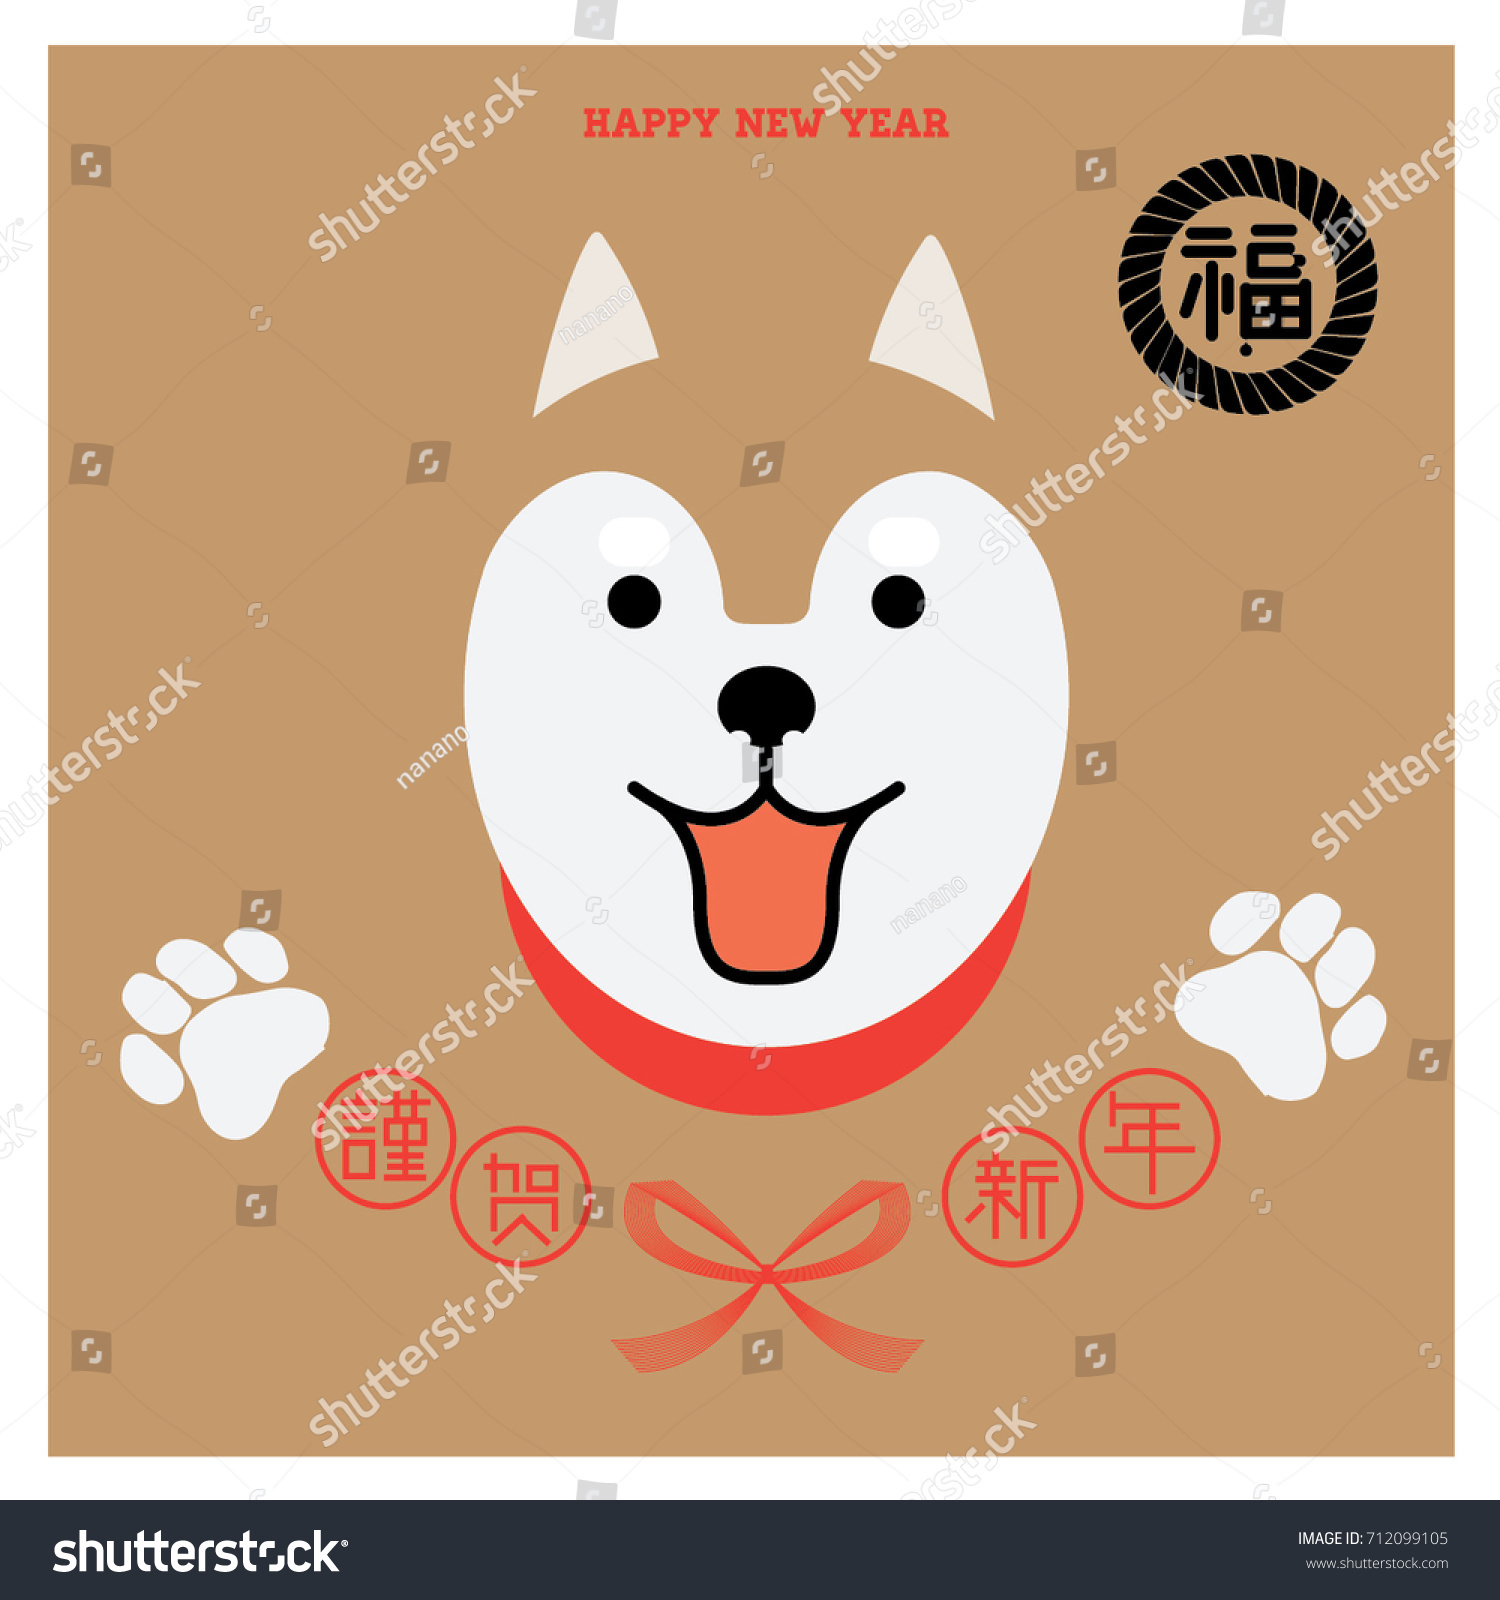 Year Dog 2018 Invitation Card Chinese Stock Vector 712099105 - Shutterstock1500 x 1600